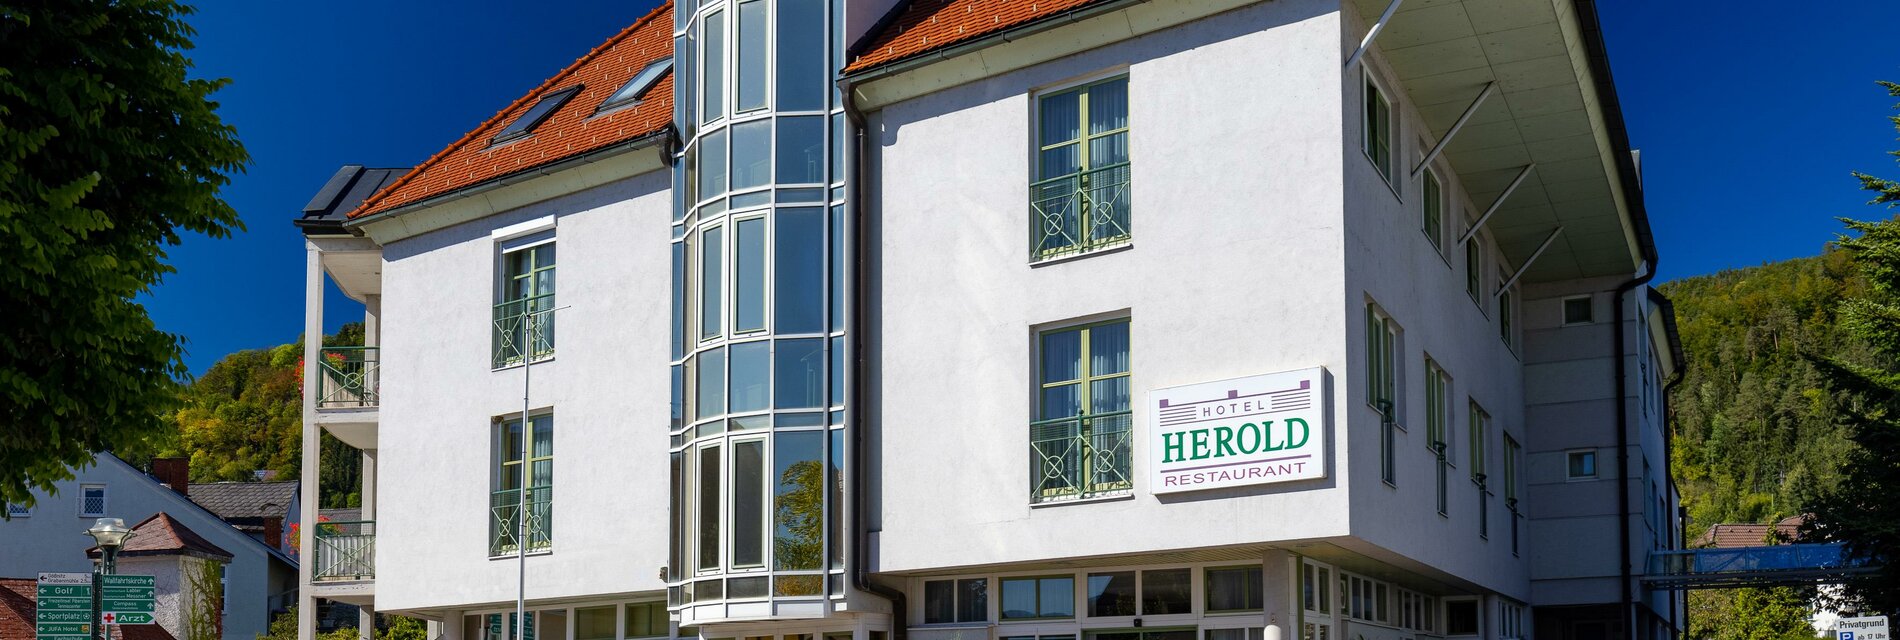 Hotel Herold 01